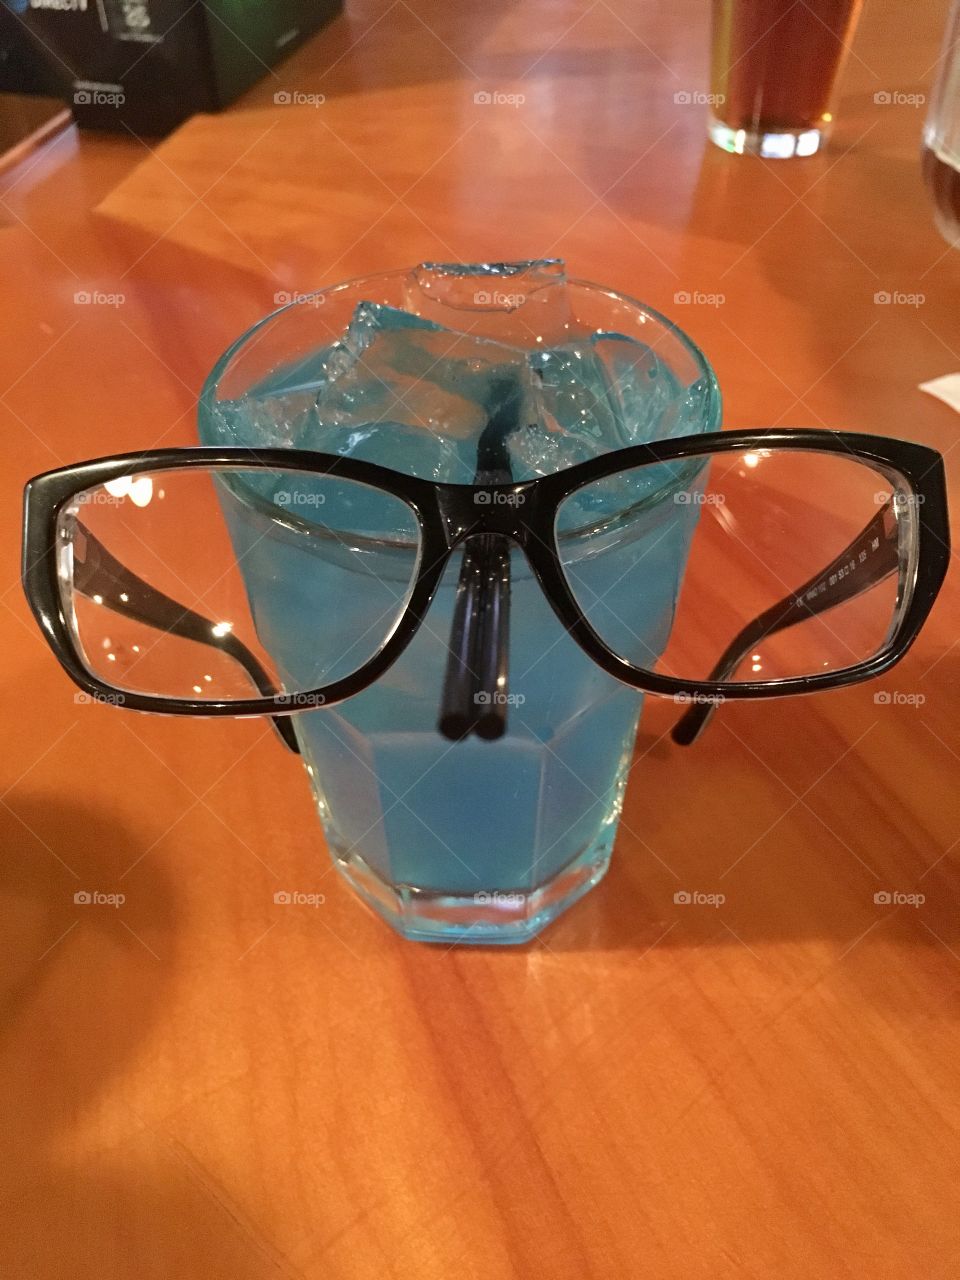 Glasses on a blue Long Island ice tea 